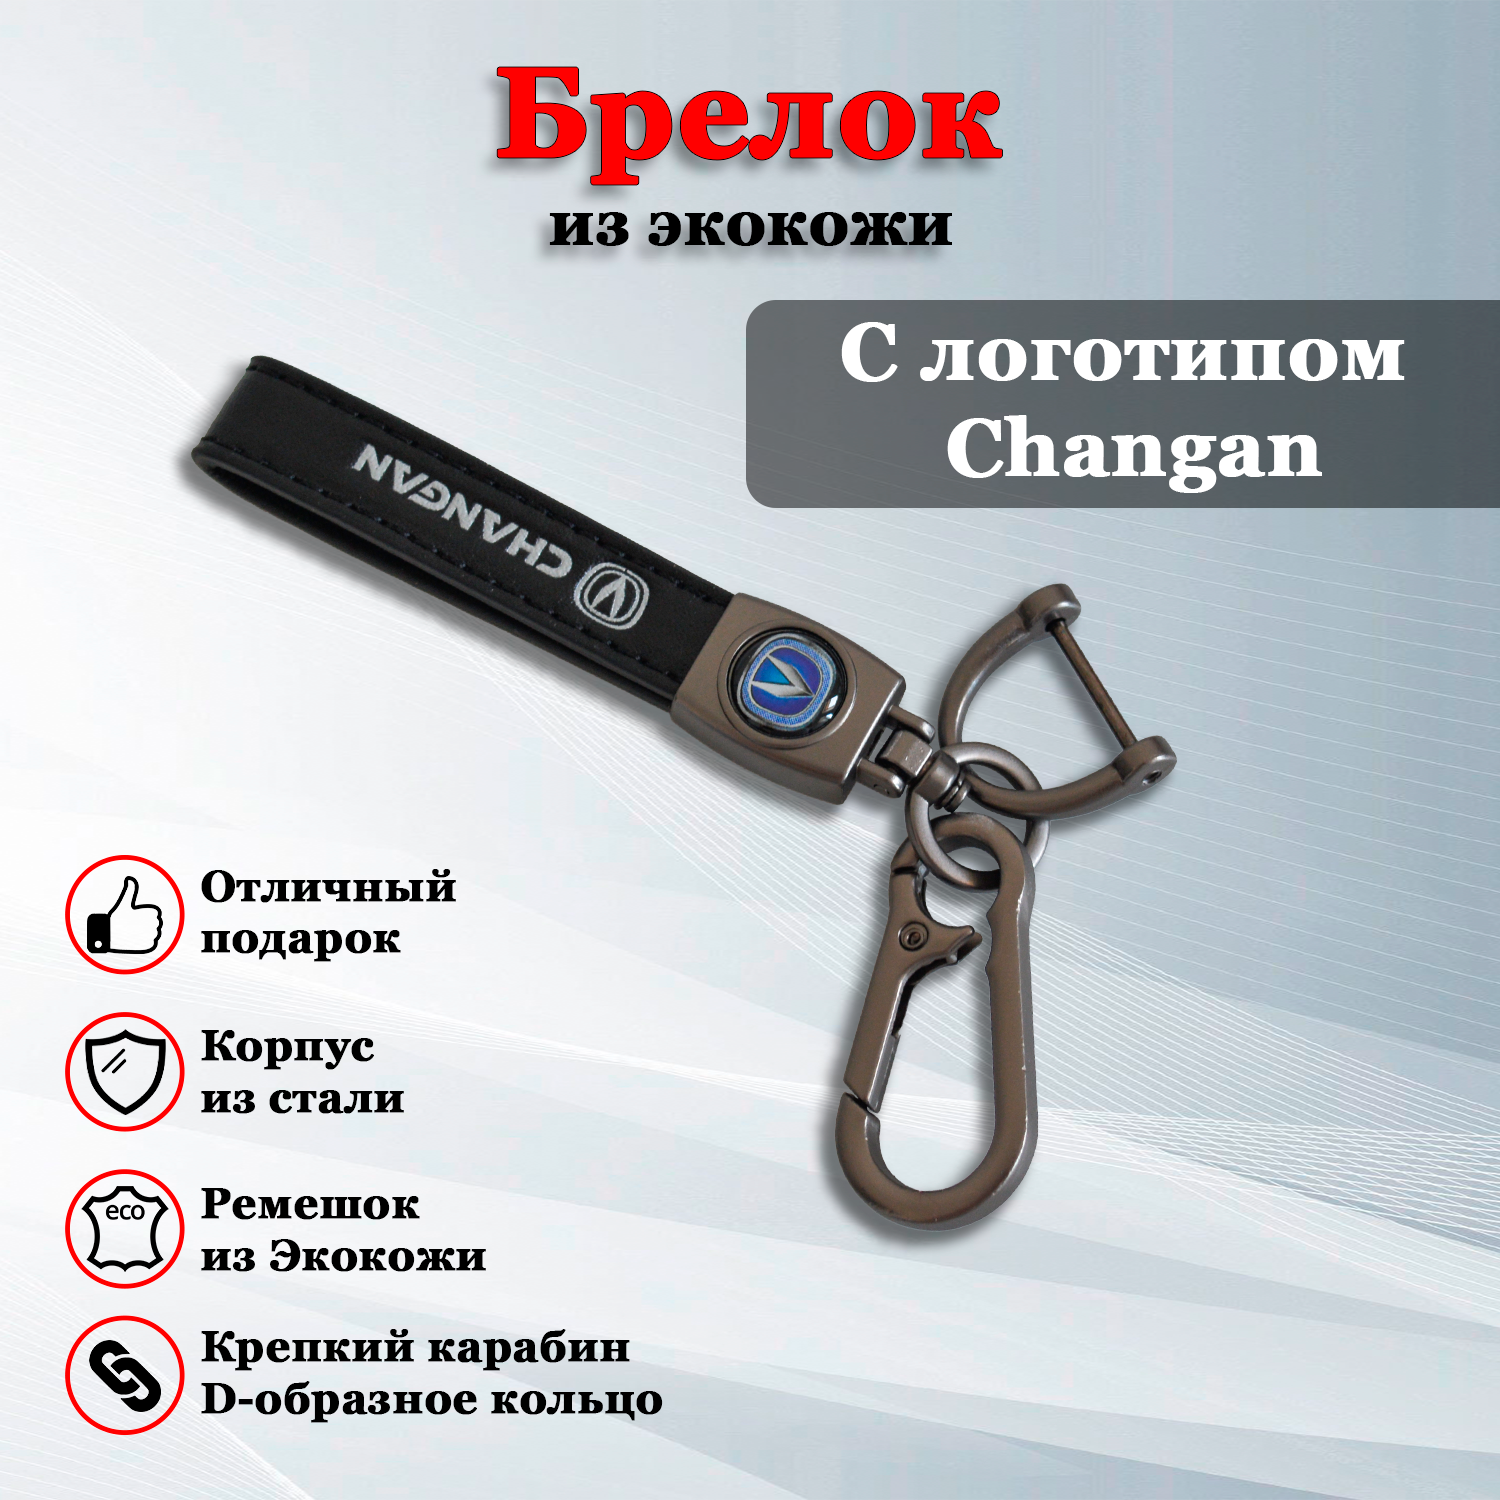 Брелок Брелок, карабин для ключей авто с логотипом Чанган (Changan) (КАРАБИН)